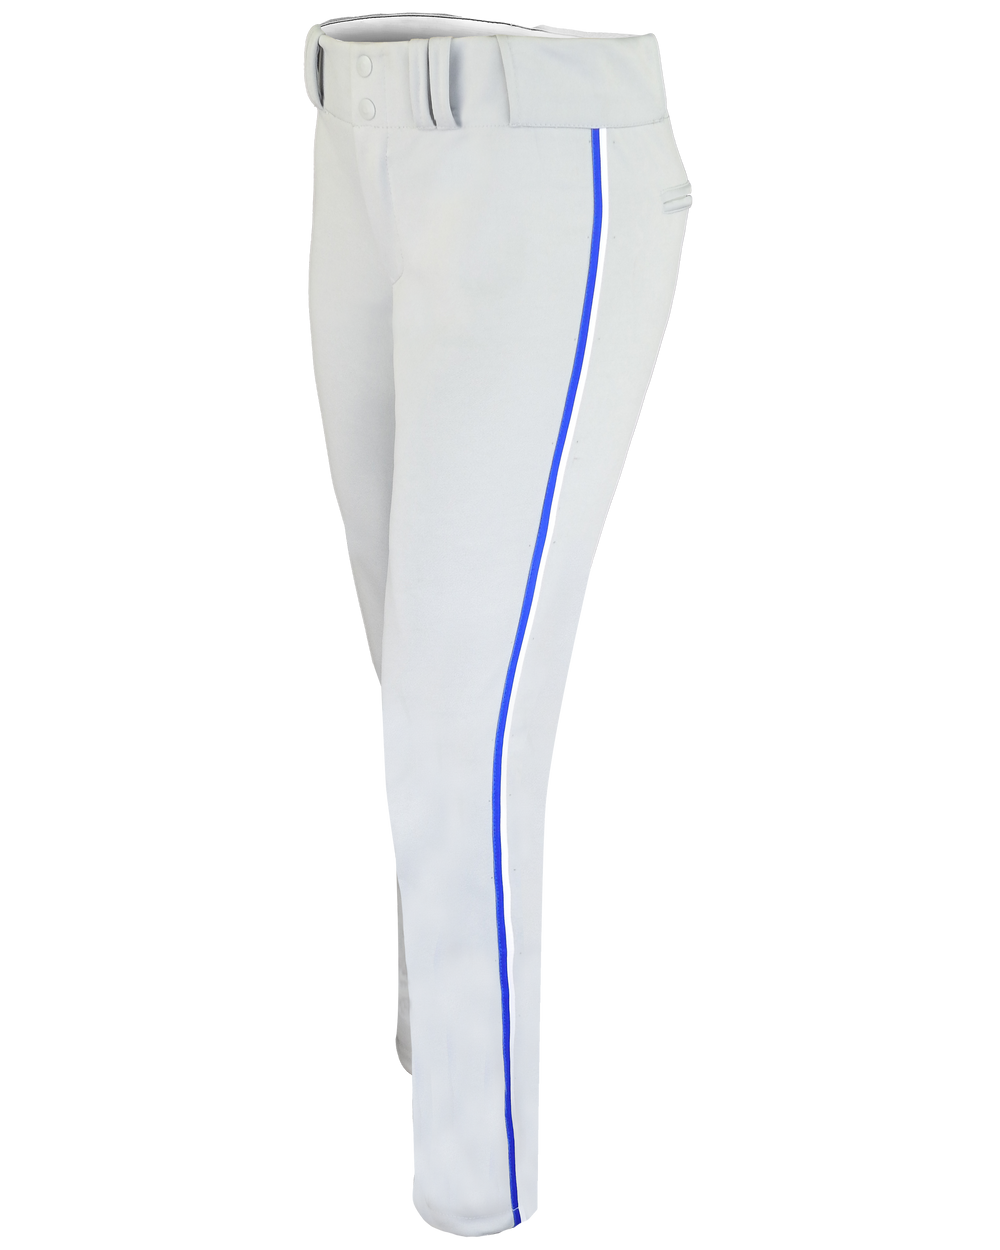 Dyed Open-Bottom Softball Pants W/ Braiding